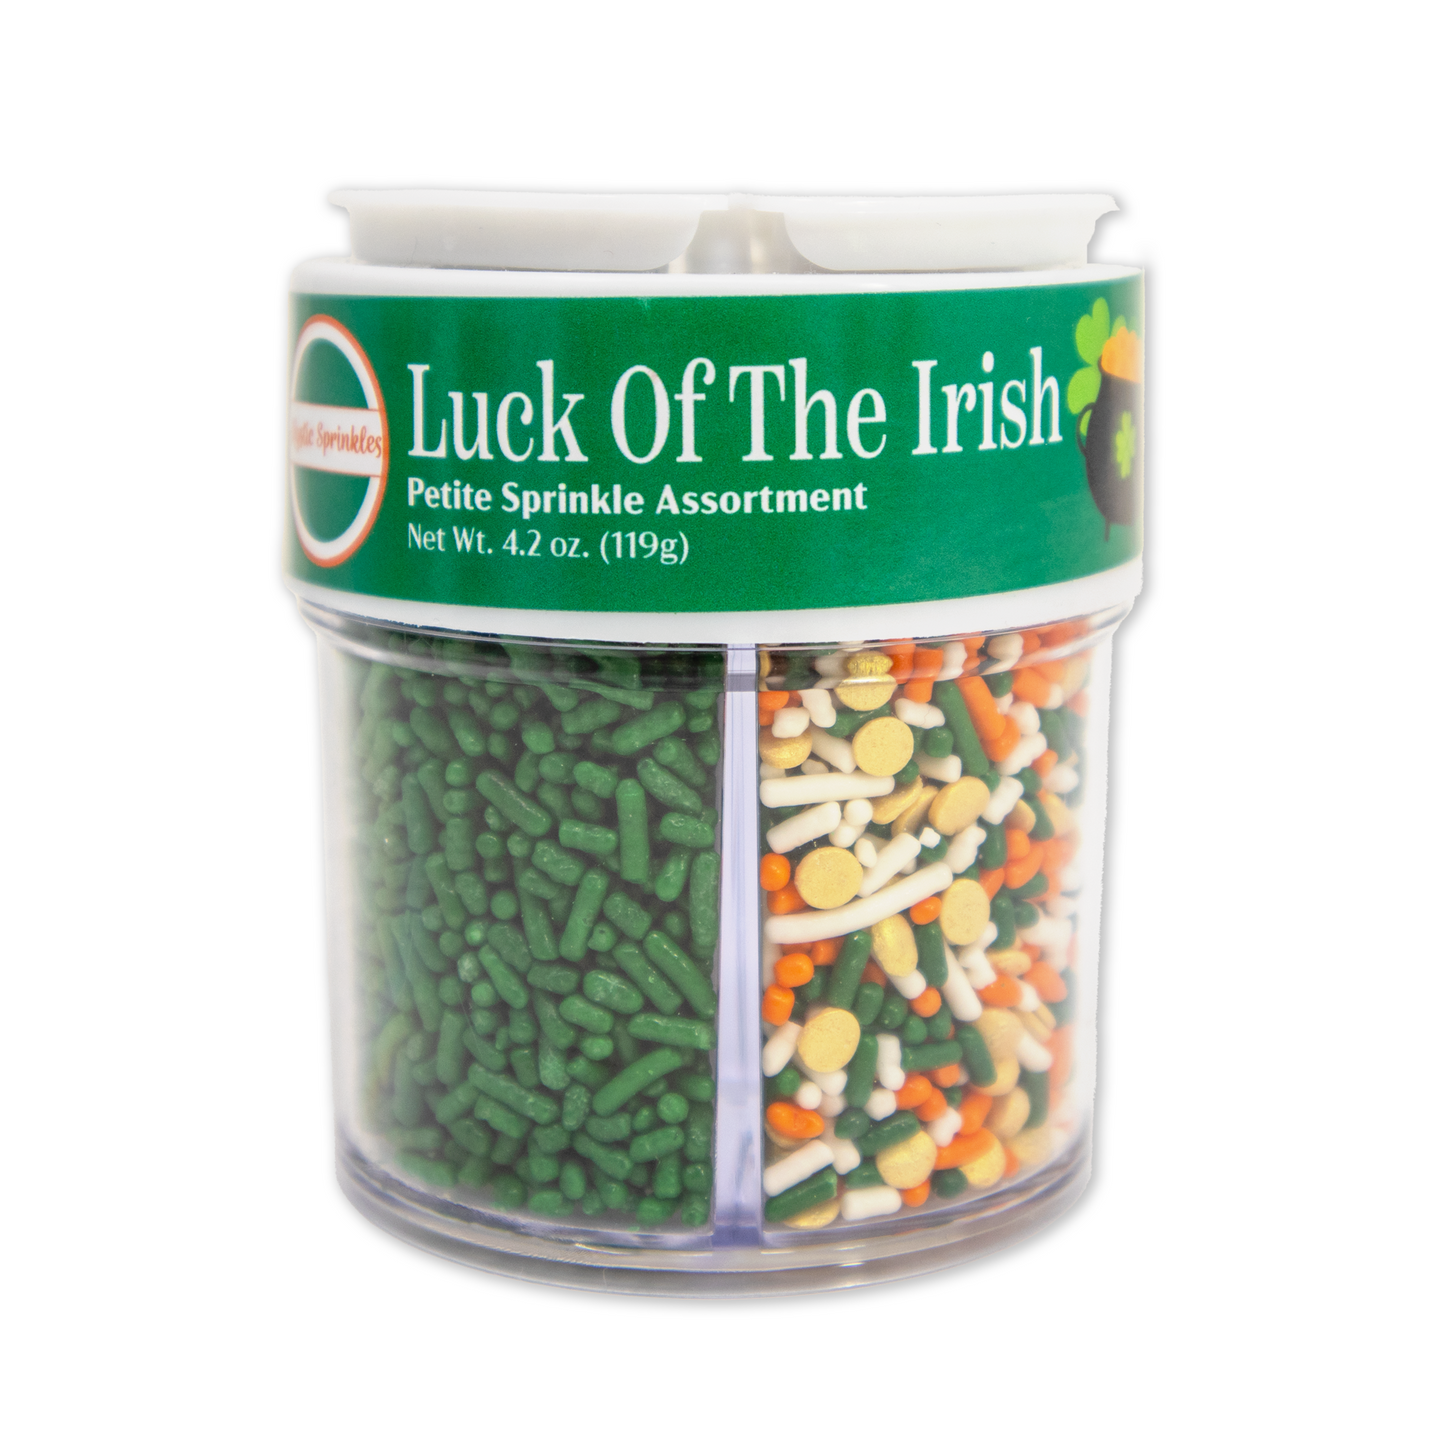 Luck of the Irish Petite Sprinkle Assortment 4.2oz